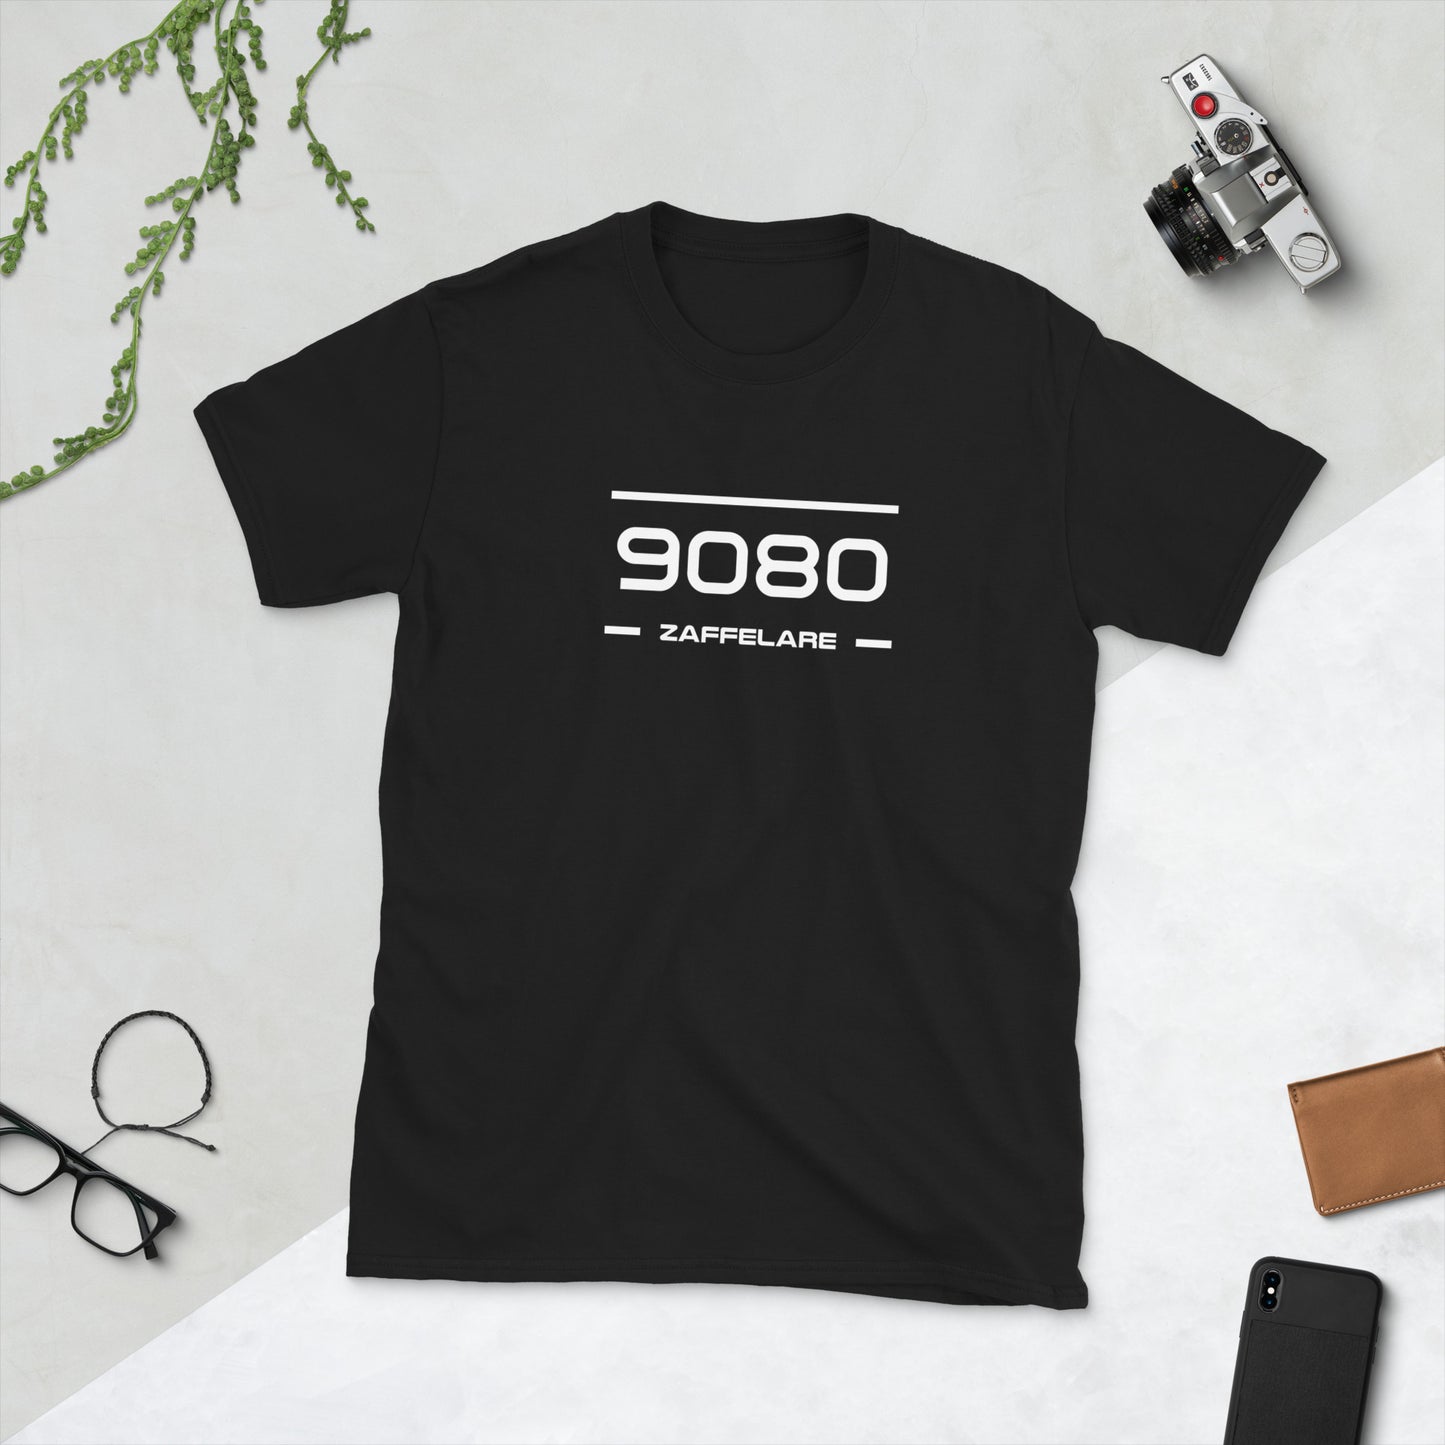 T-Shirt - 9080 - Zaffelare